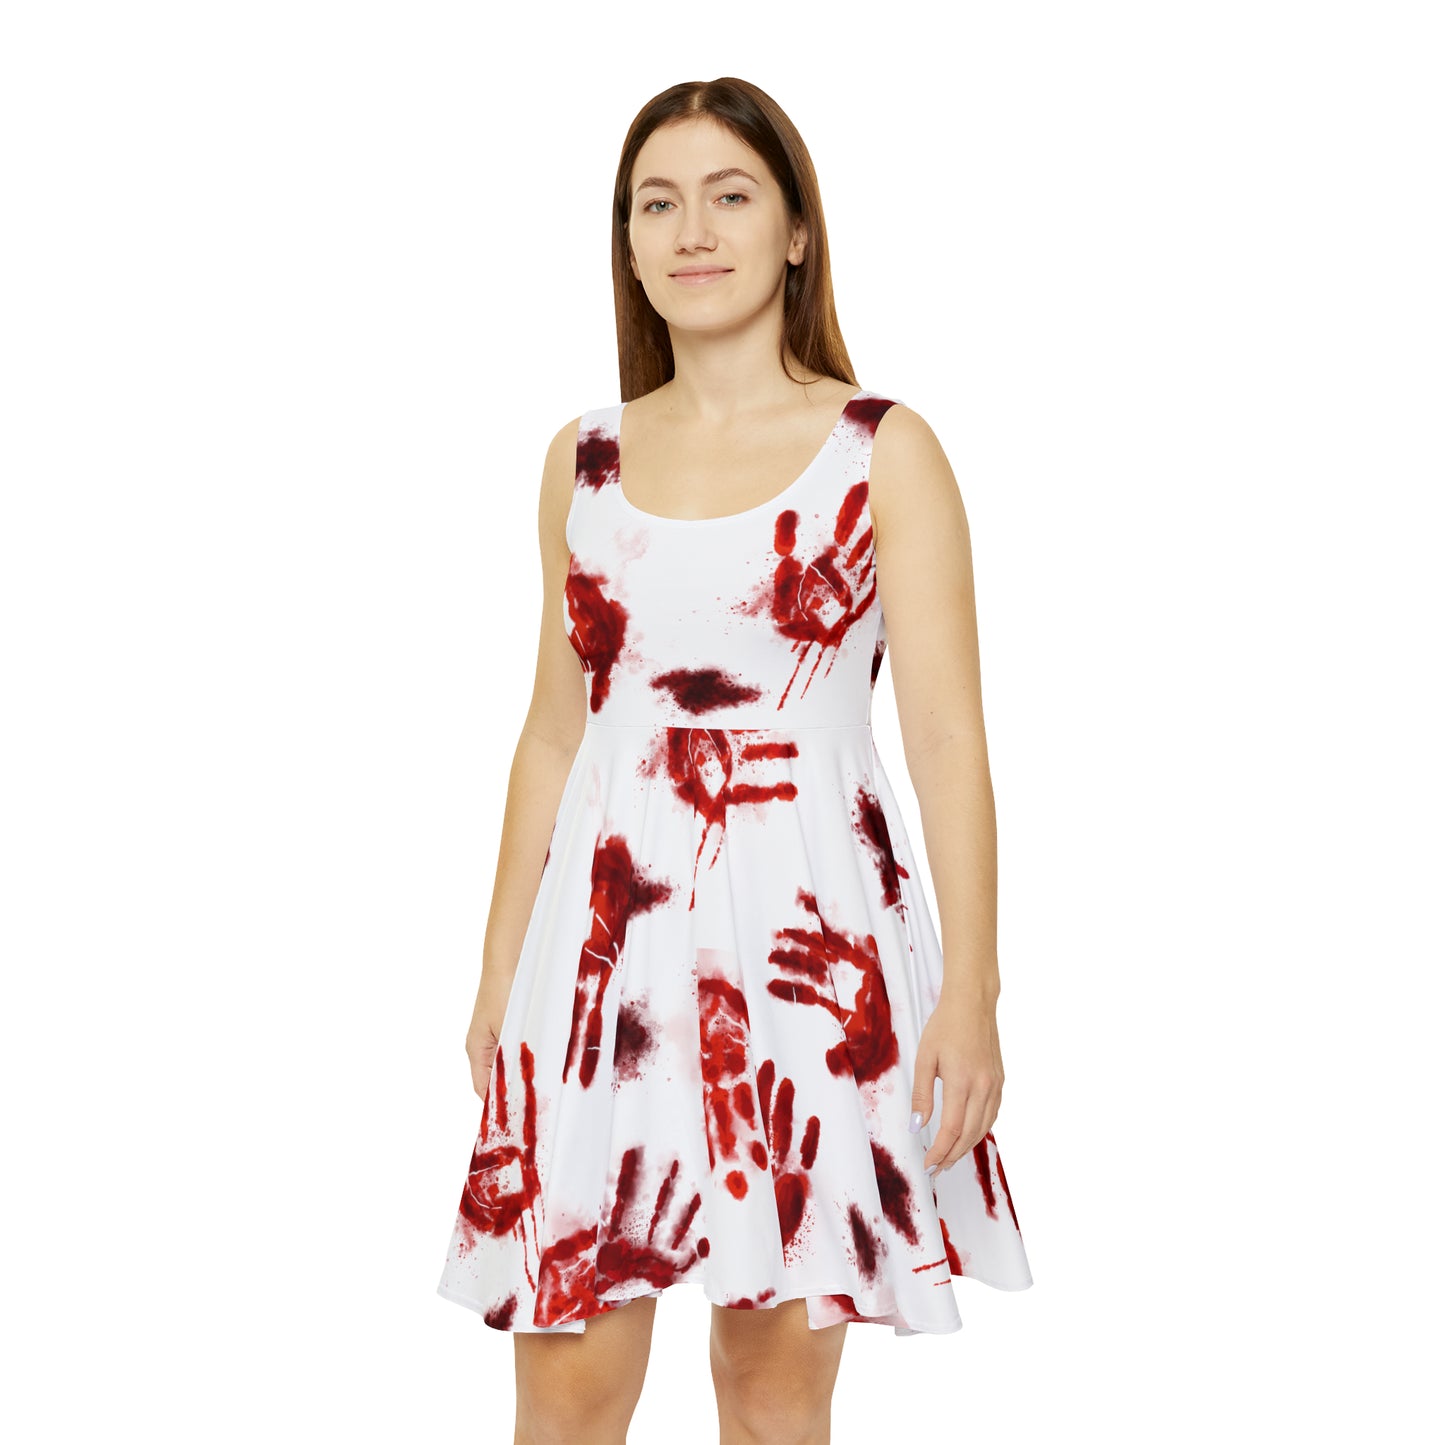 Halloween - Bloody Hands - Dress (White)